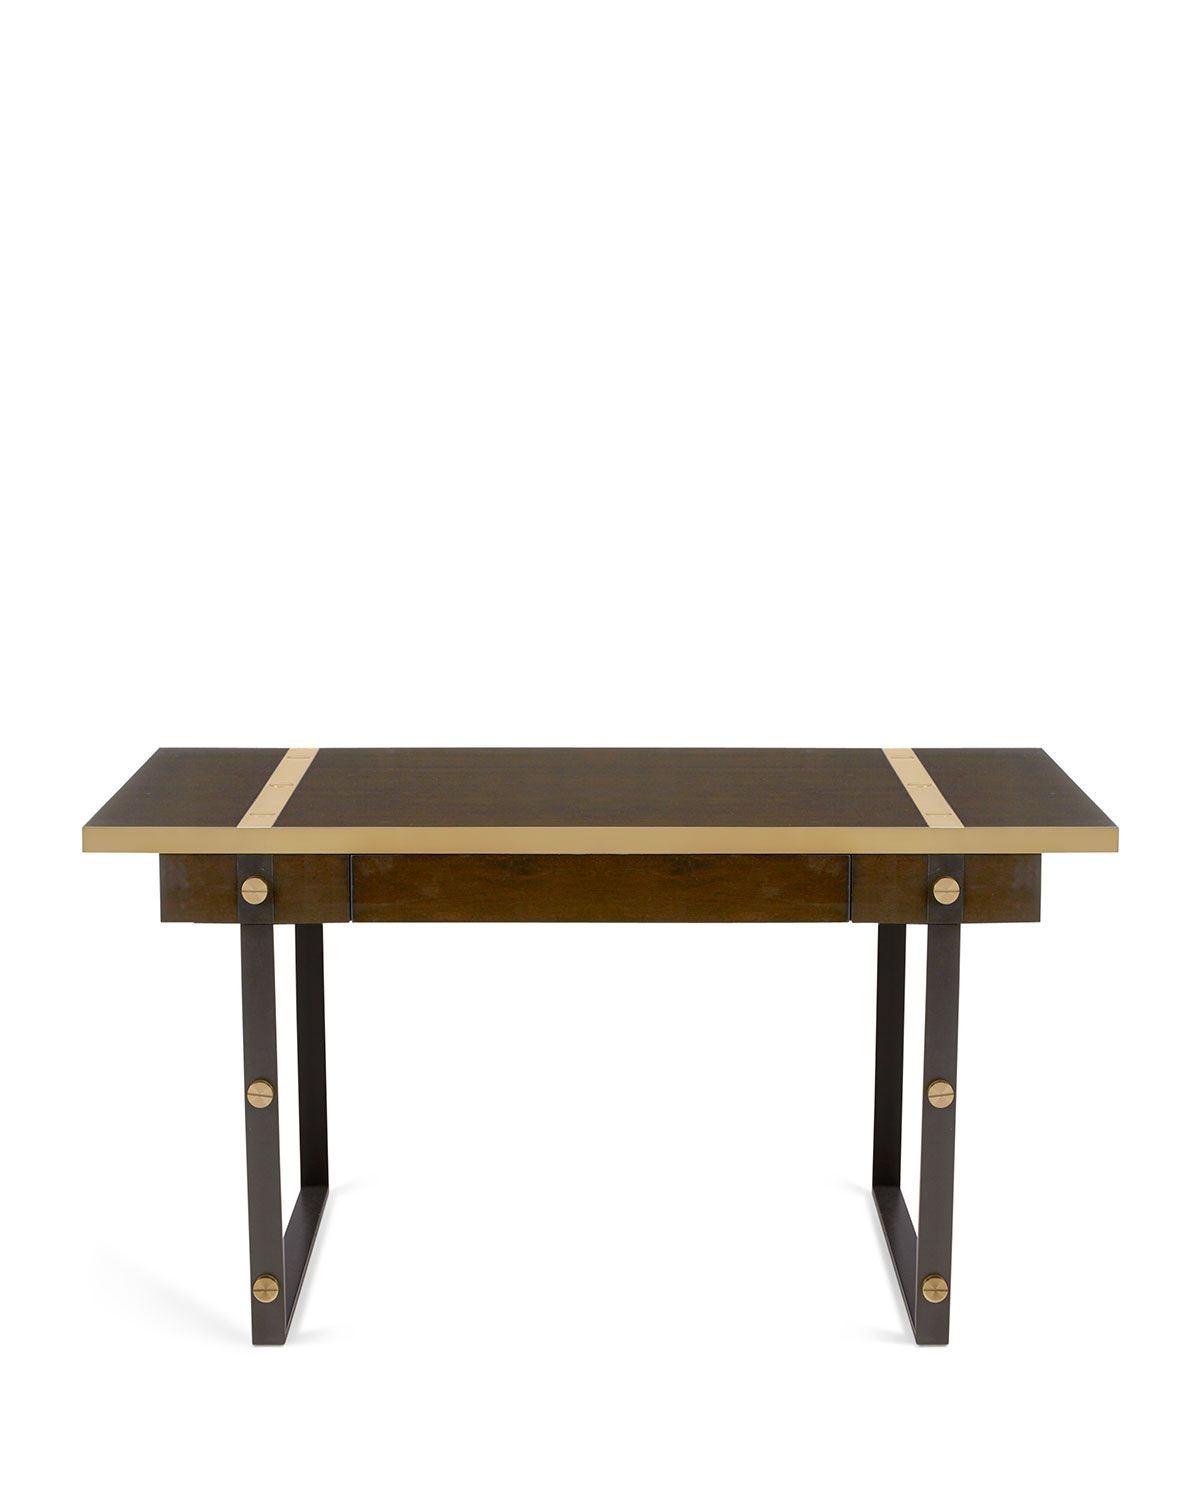 minimalist desk design